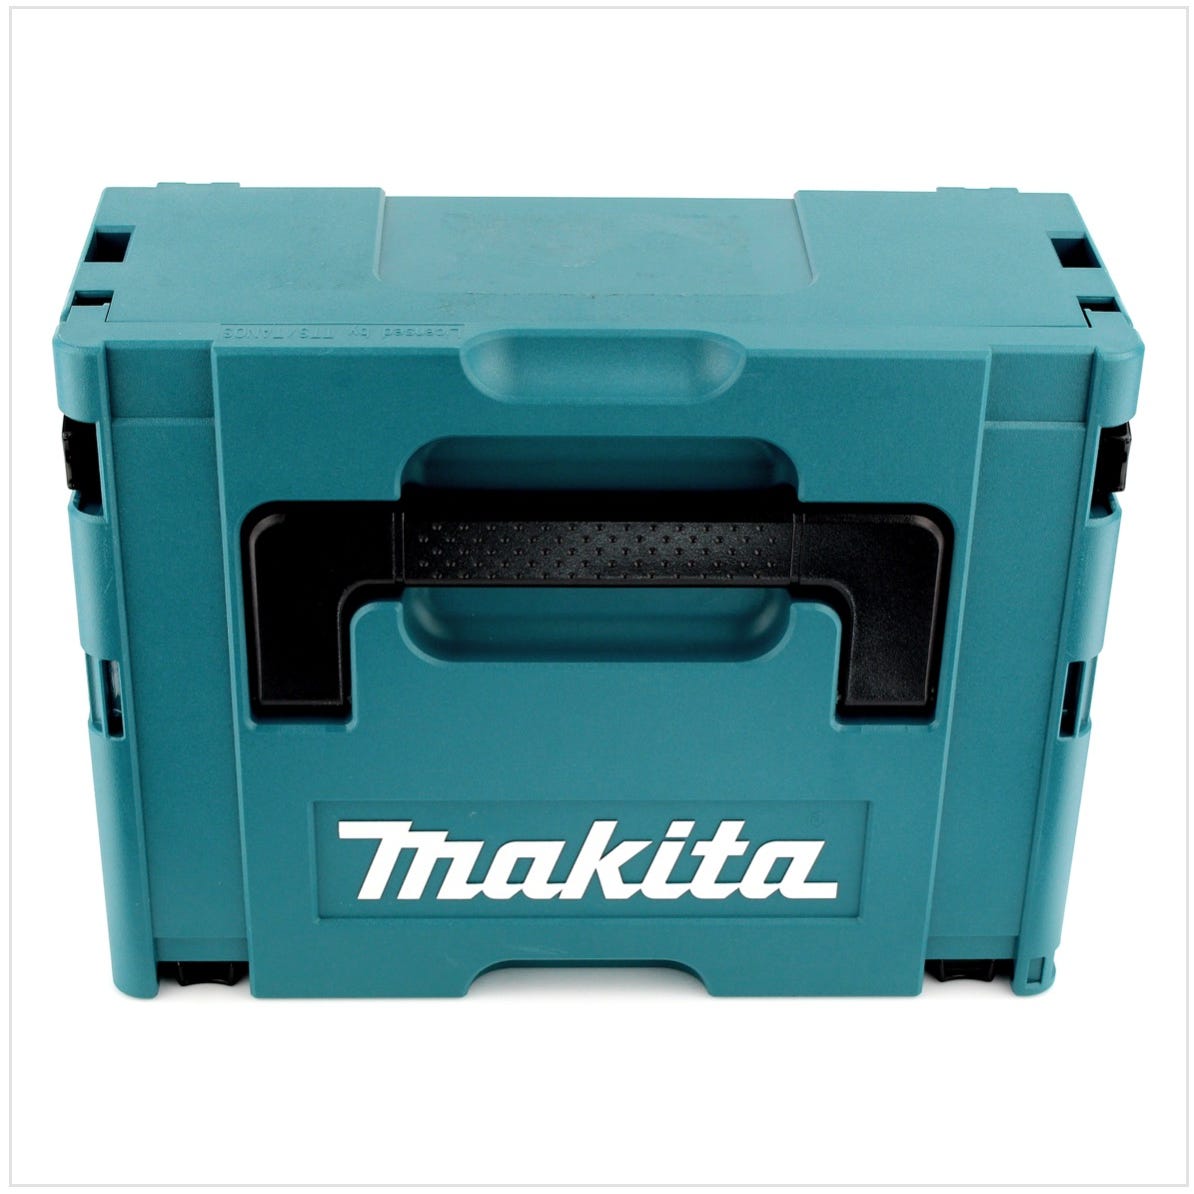 Makita DHP 481 ZJ 18V Perceuse visseuse à percussion sans fil Brushless 115 Nm en Coffret Makpac sans Batterie ni Chargeur 2